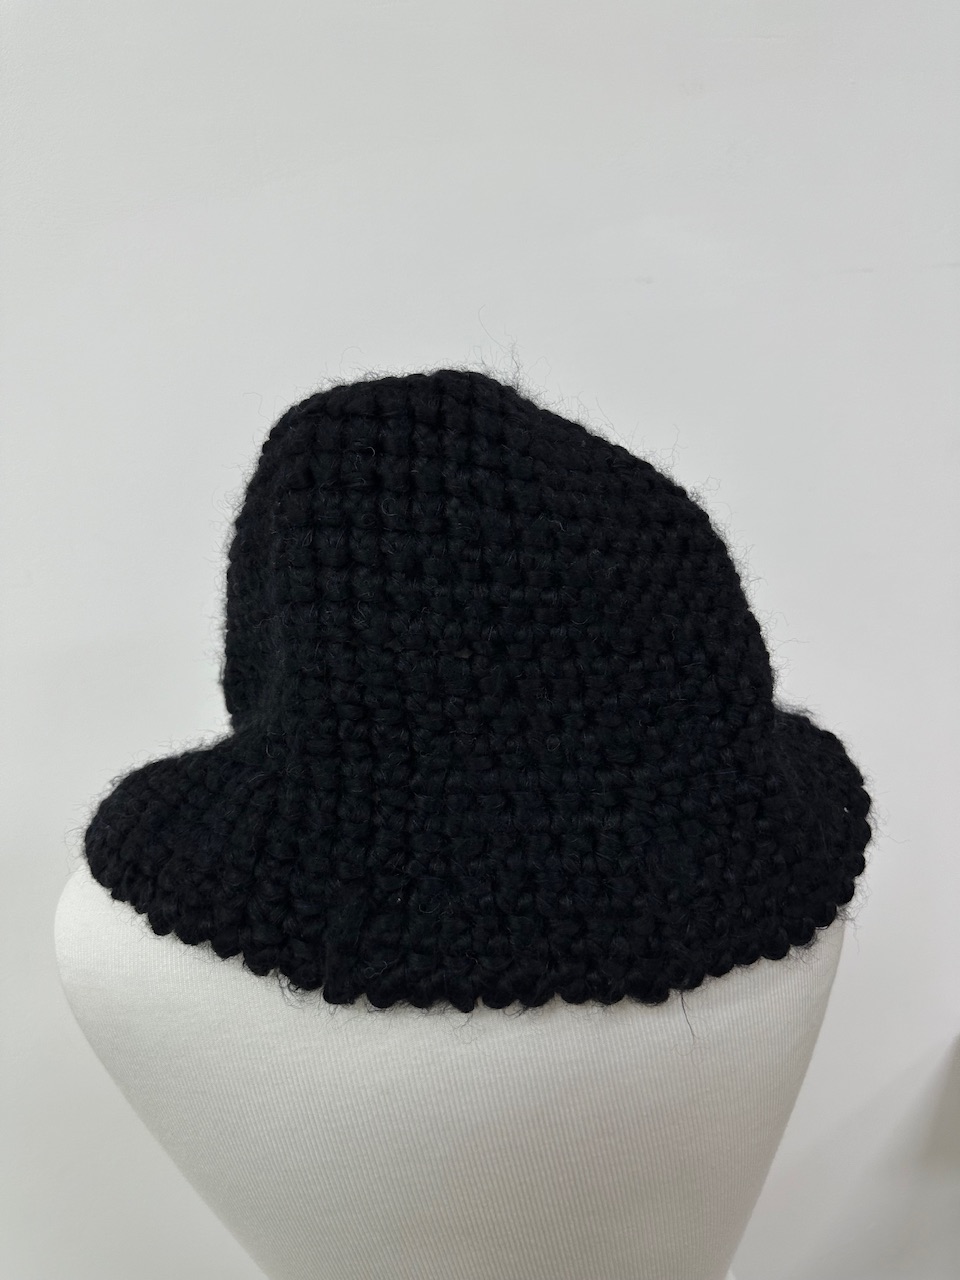 Black crochet hat